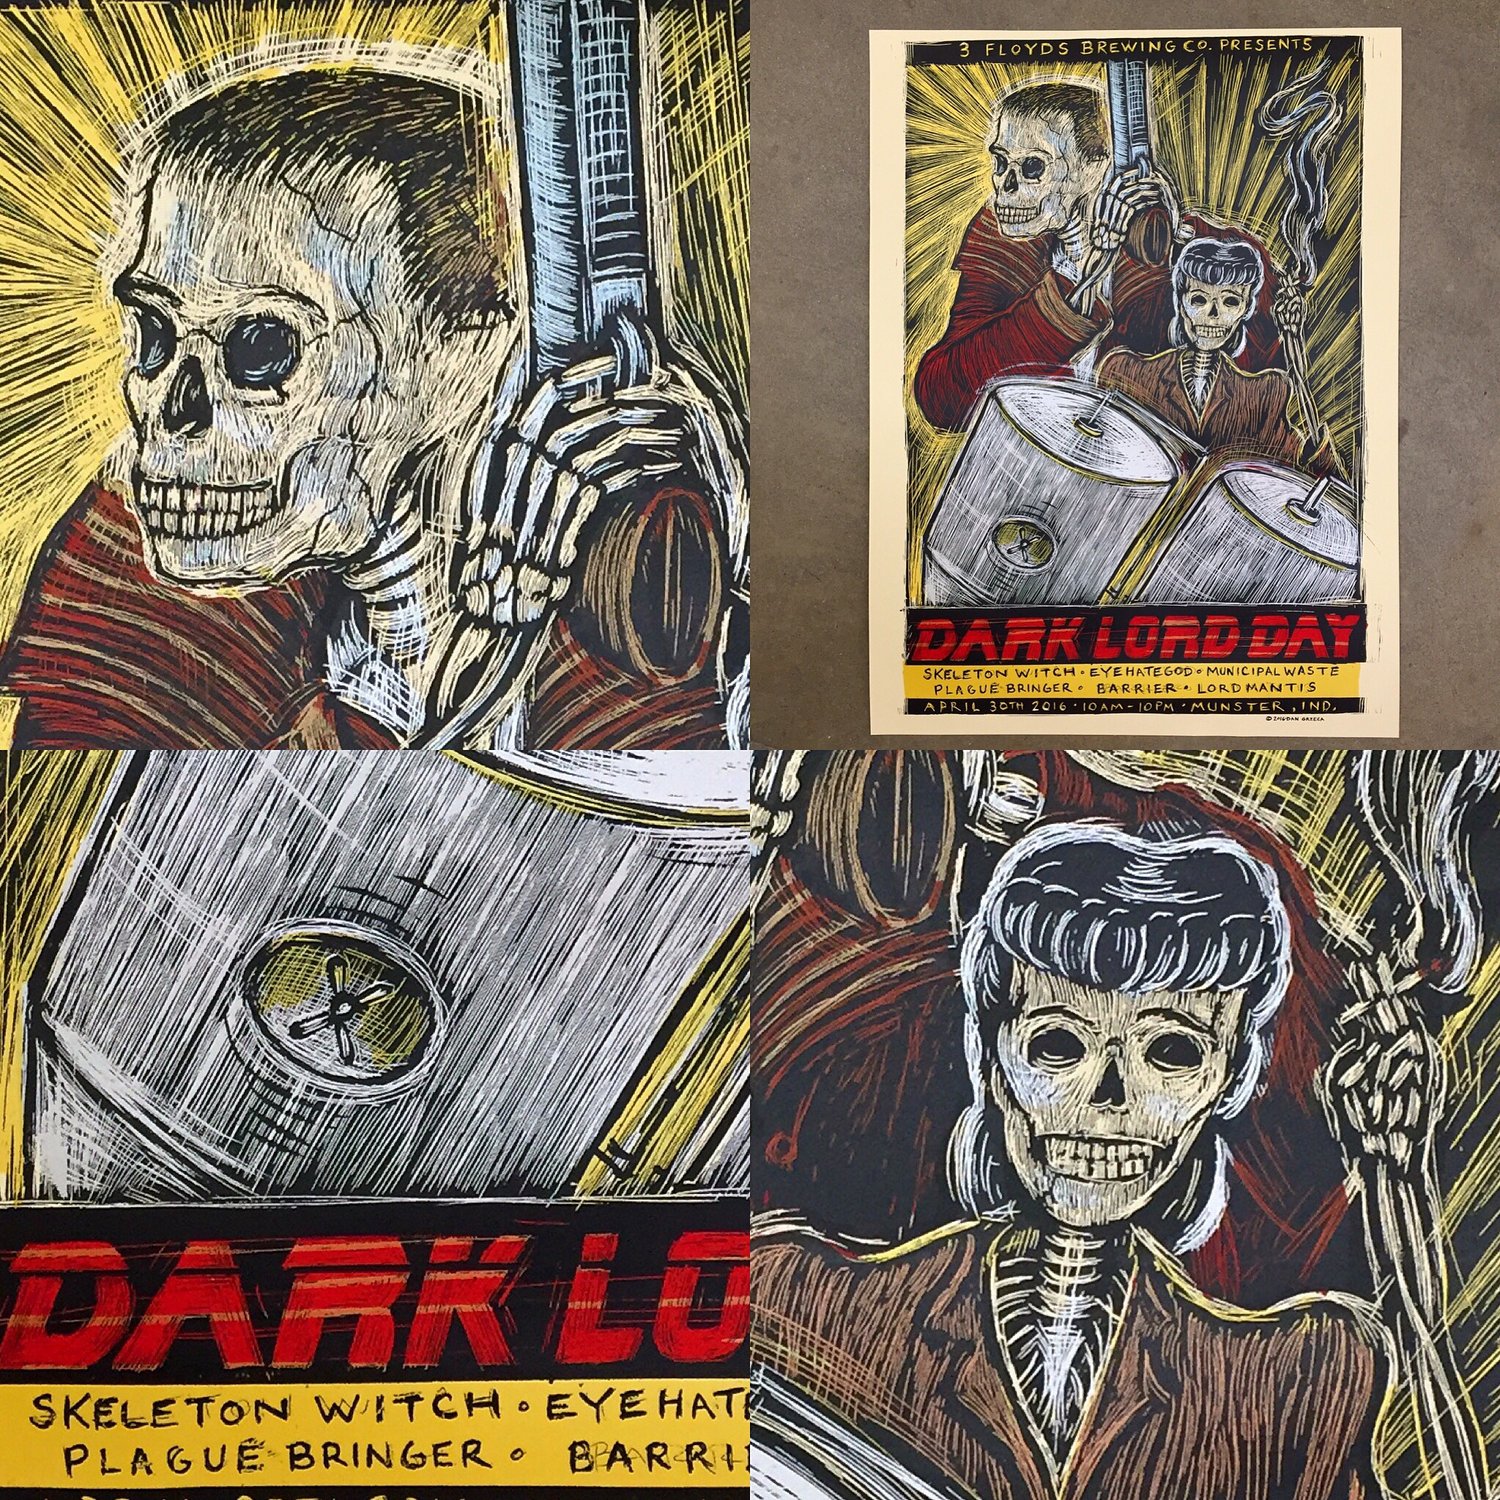 Dark Lord Day 2016 poster Ground Up Press Artwork by Dan Grzeca